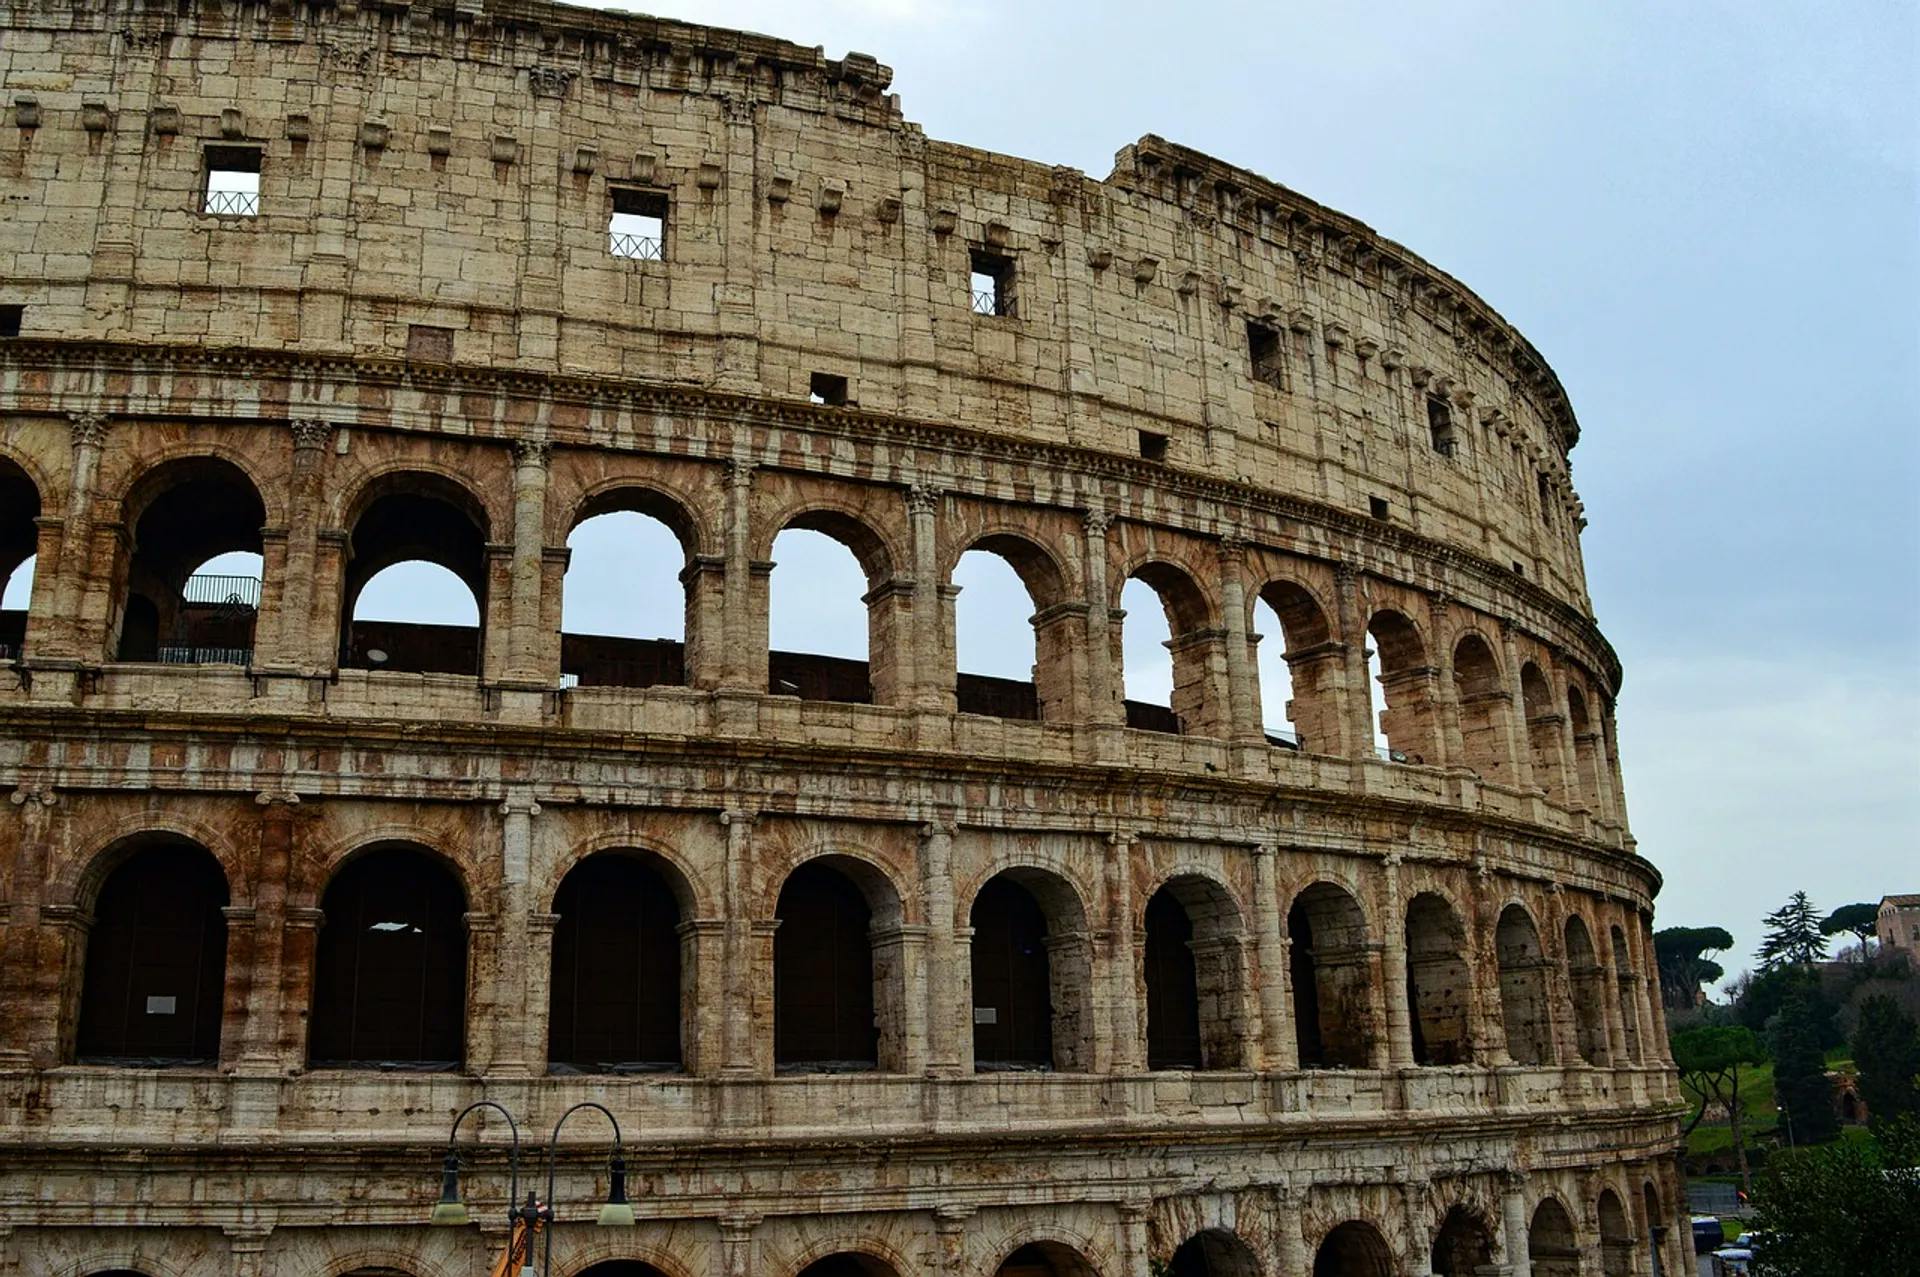 Visit the Roman Colosseum